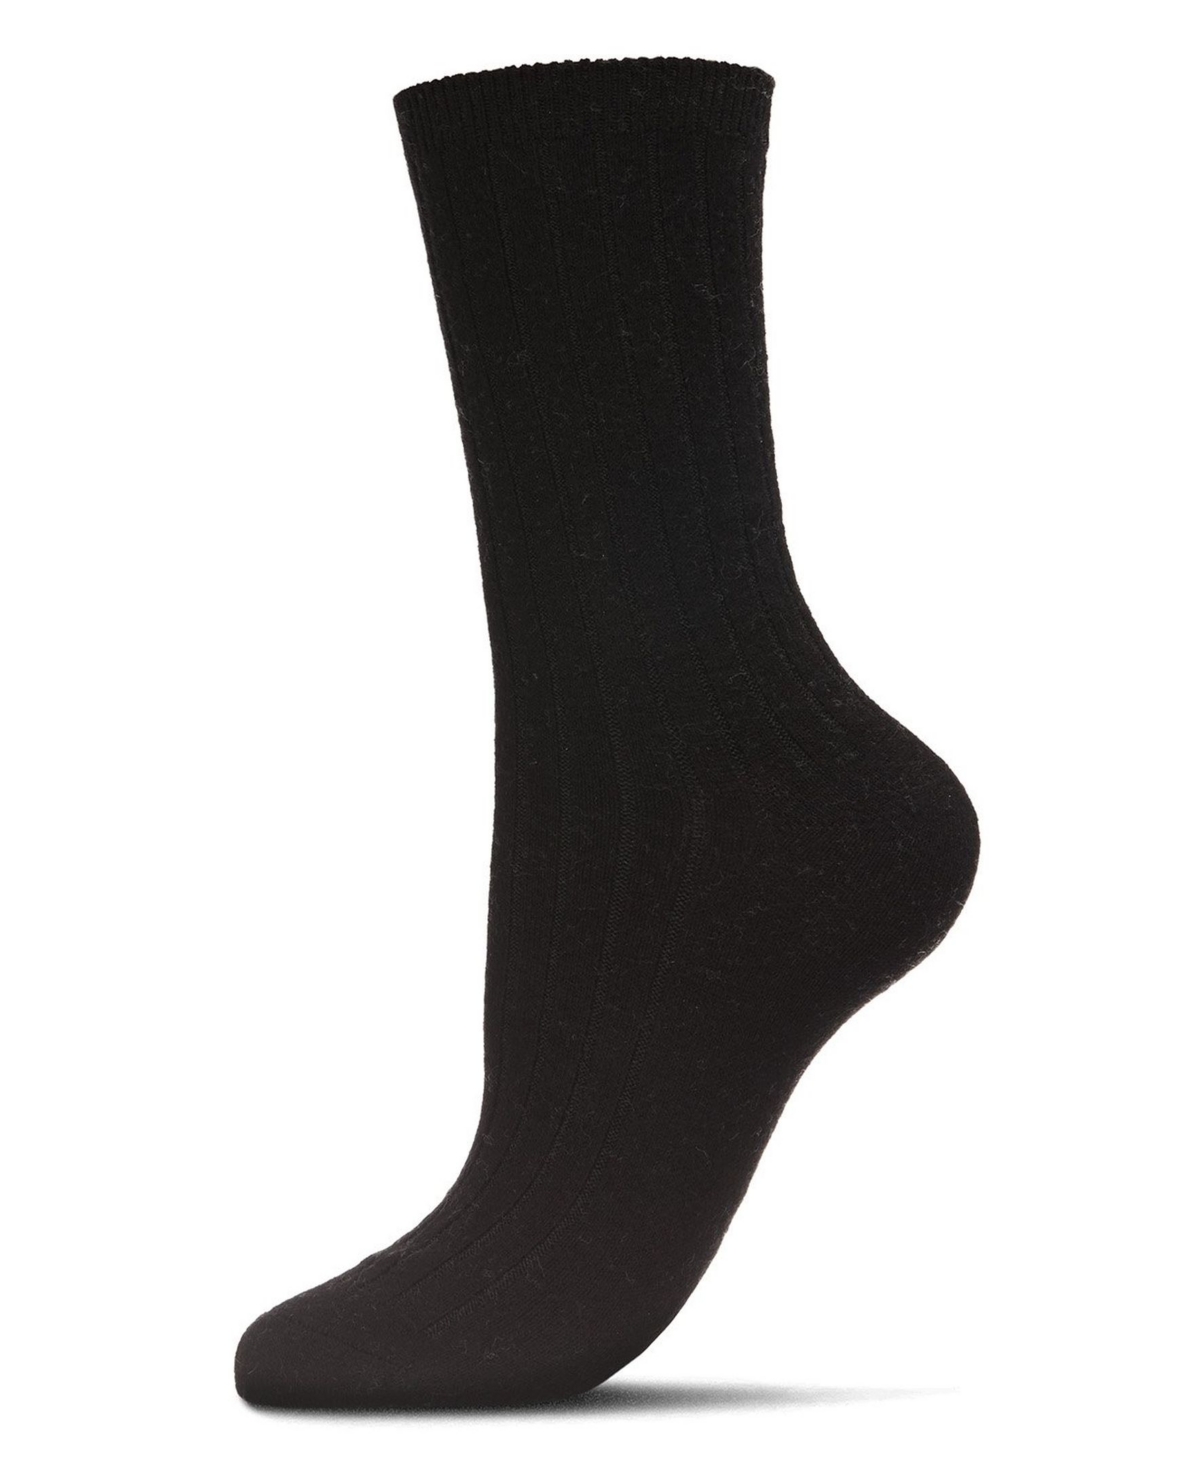 Women's Rib Cashmere Crew Socks - Black